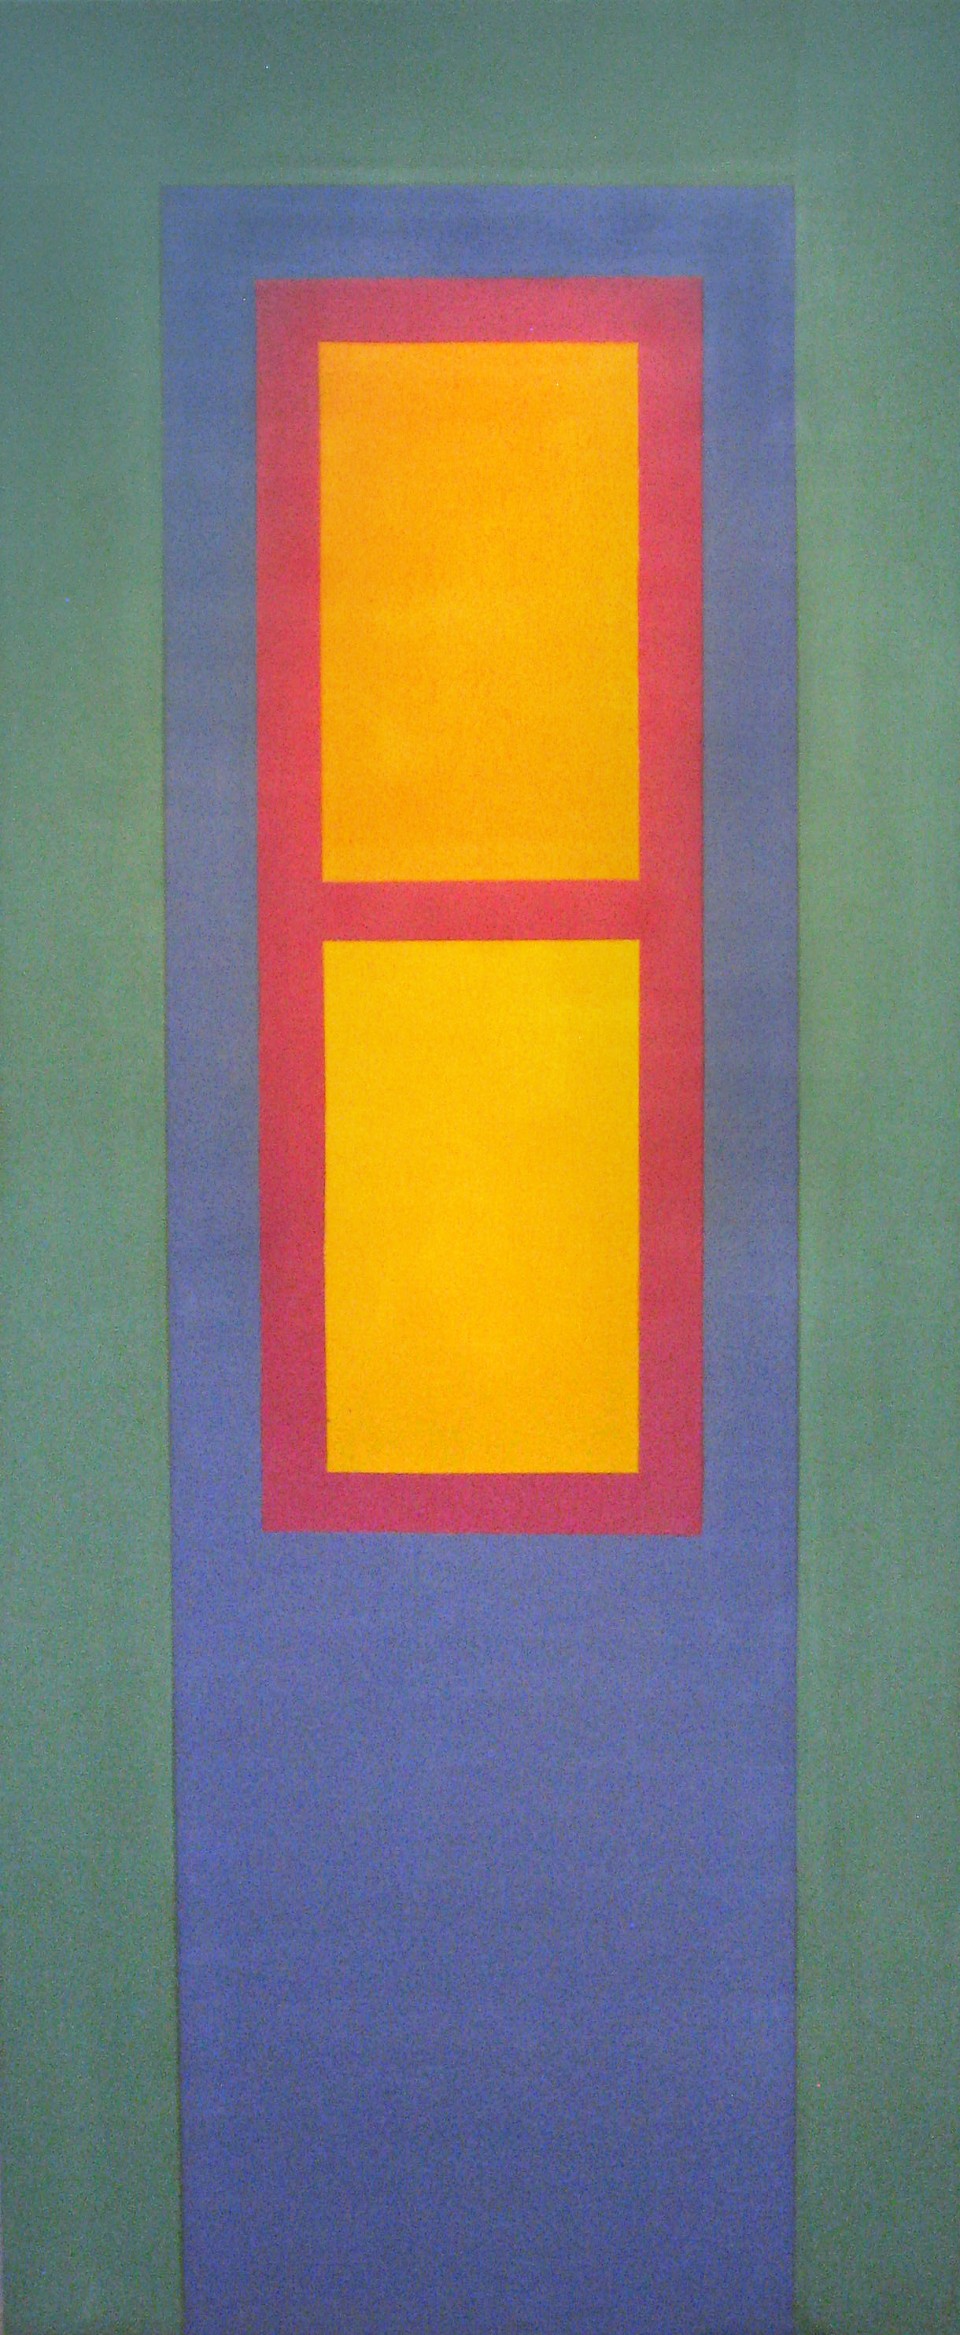 Door, 1970
Acrylic on Canvas